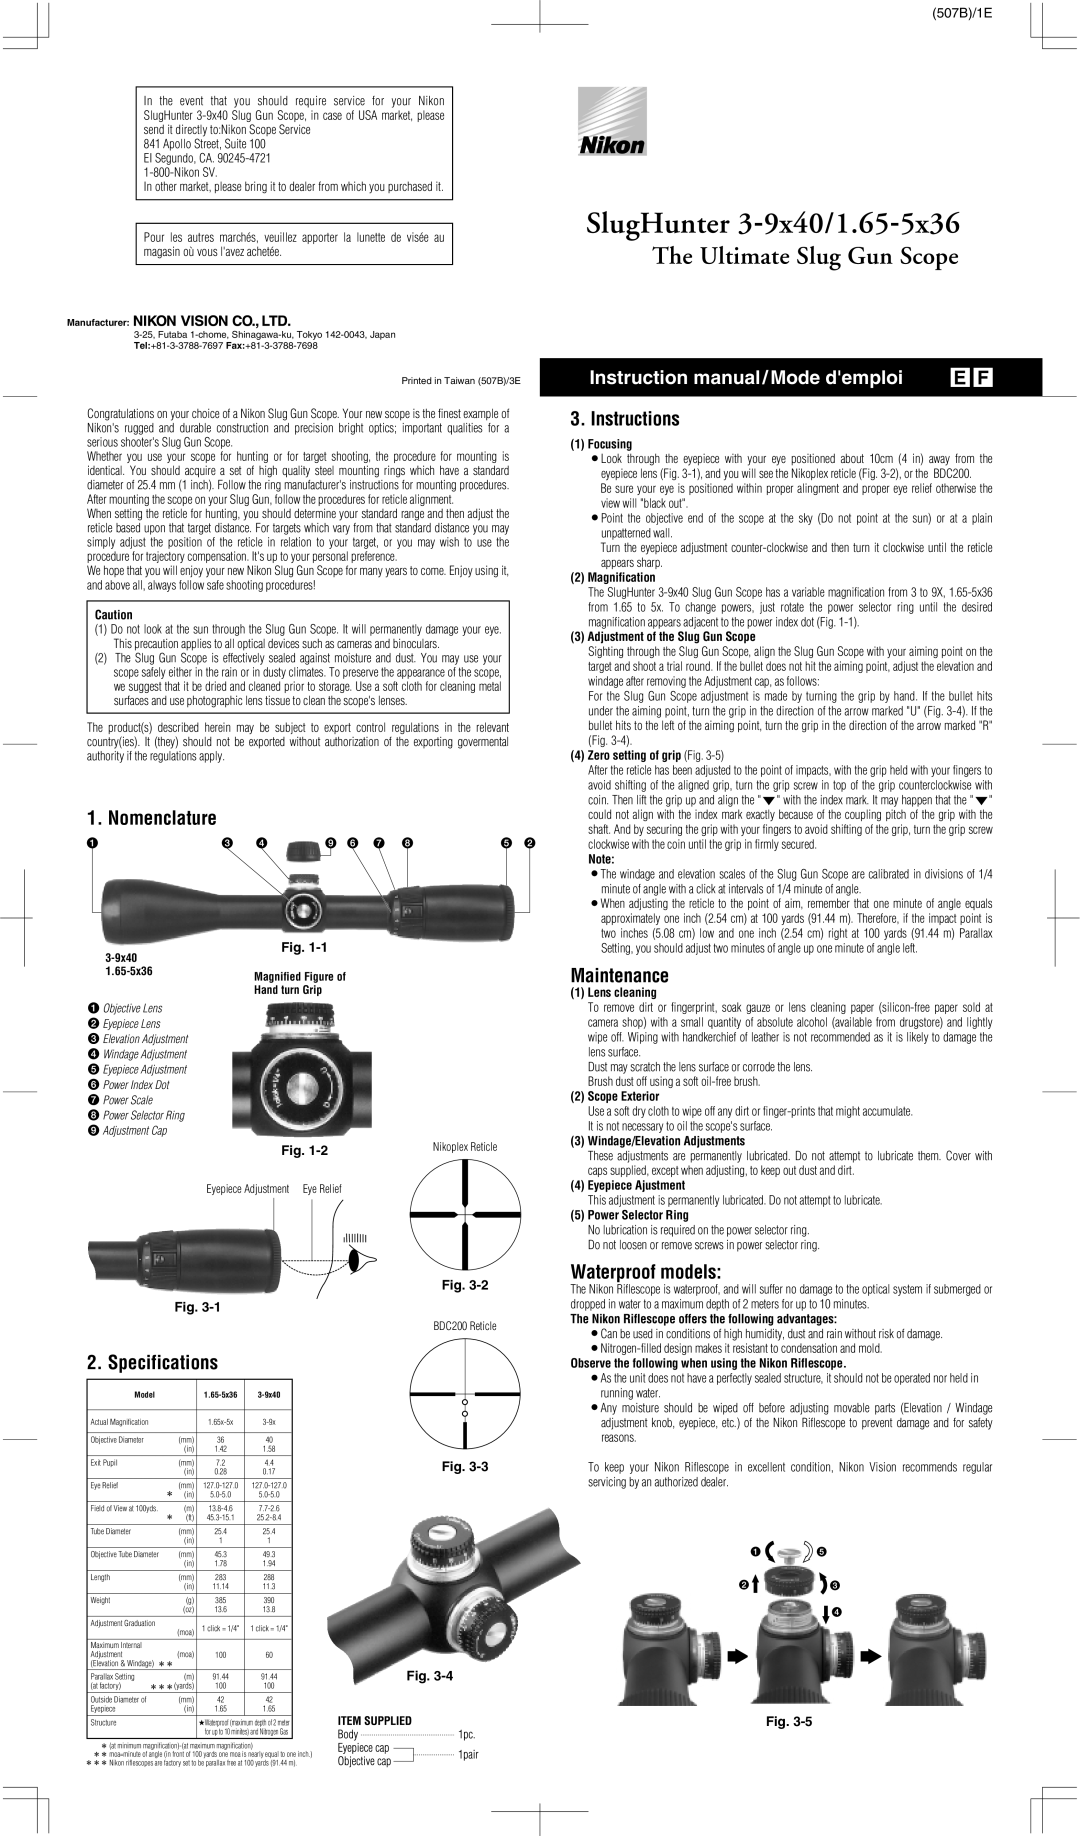 Nikon instruction manual SlugHunter 3-9x40/1.65-5x36, The Ultimate Slug Gun Scope, Nomenclature, Instructions, 507B/1E 